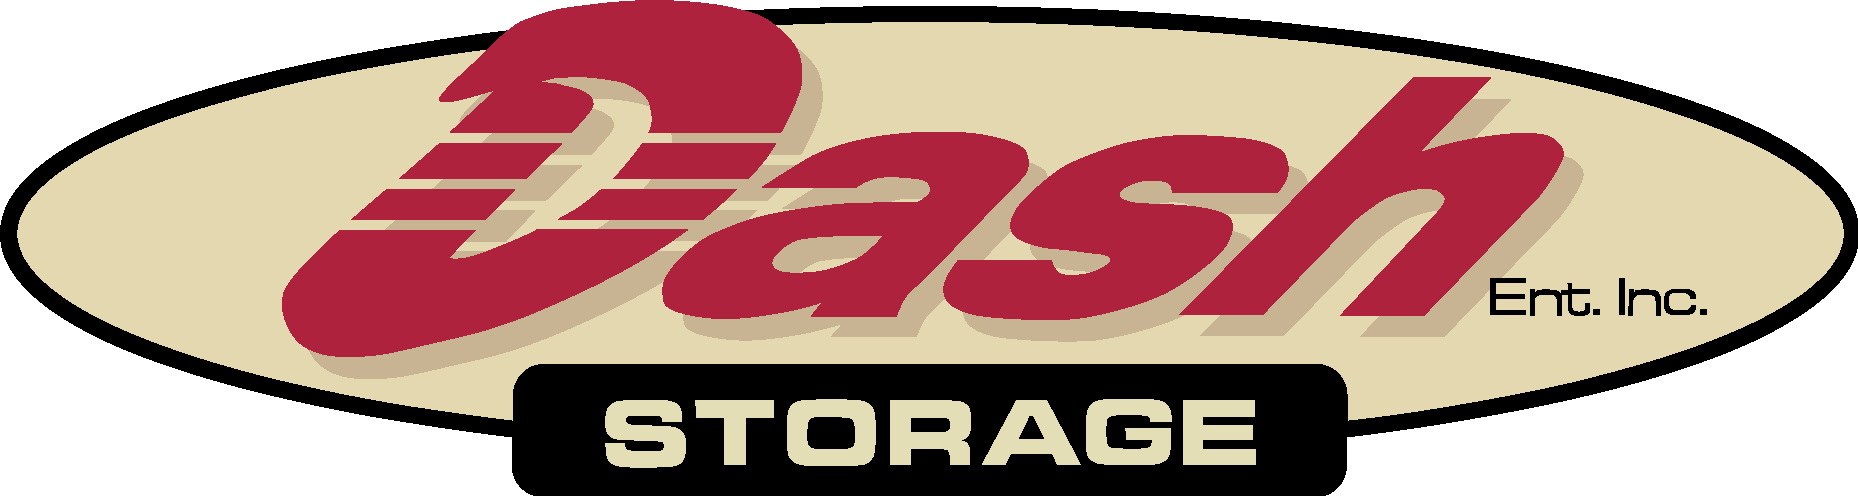 Dash Storage Logo Vector